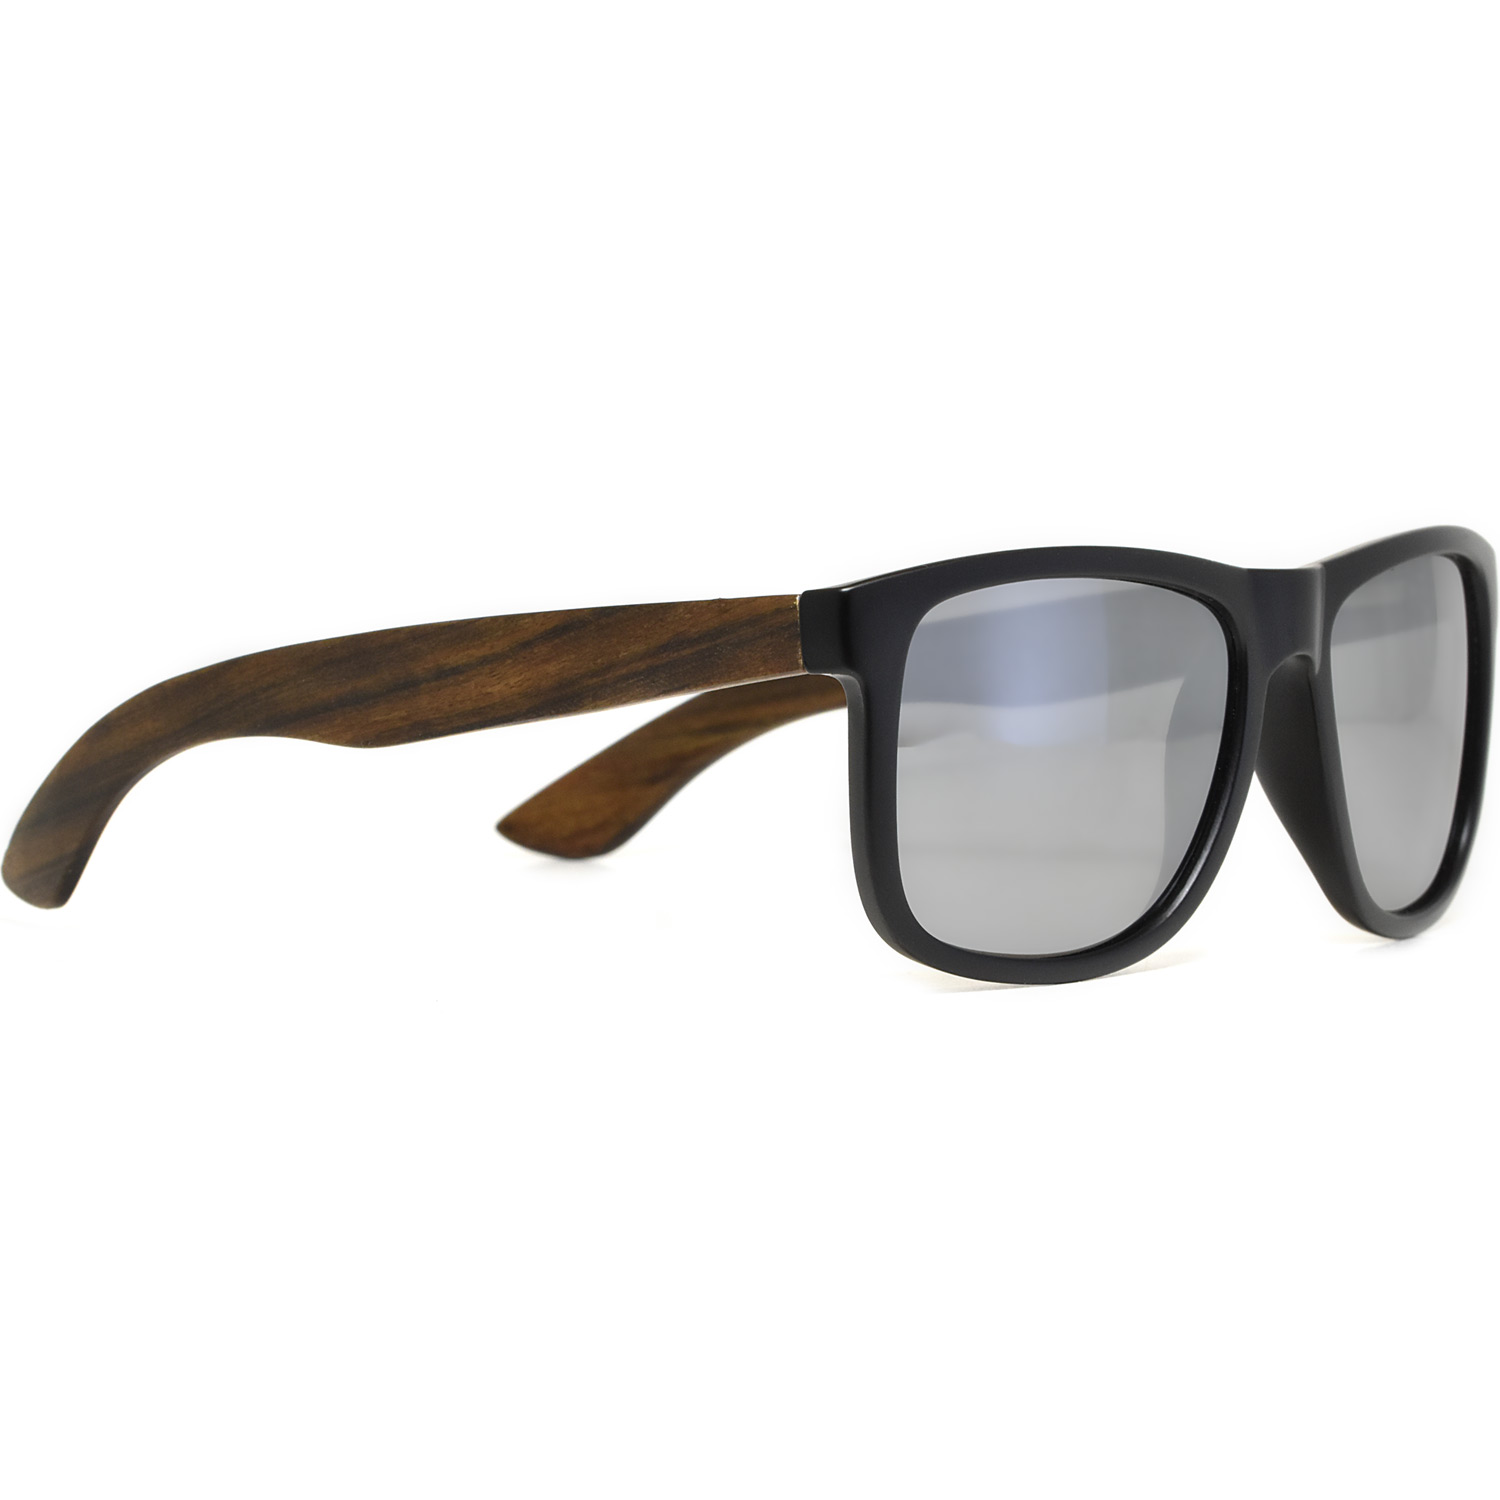 Square ebony wood sunglasses silver mirrored polarized lenses right